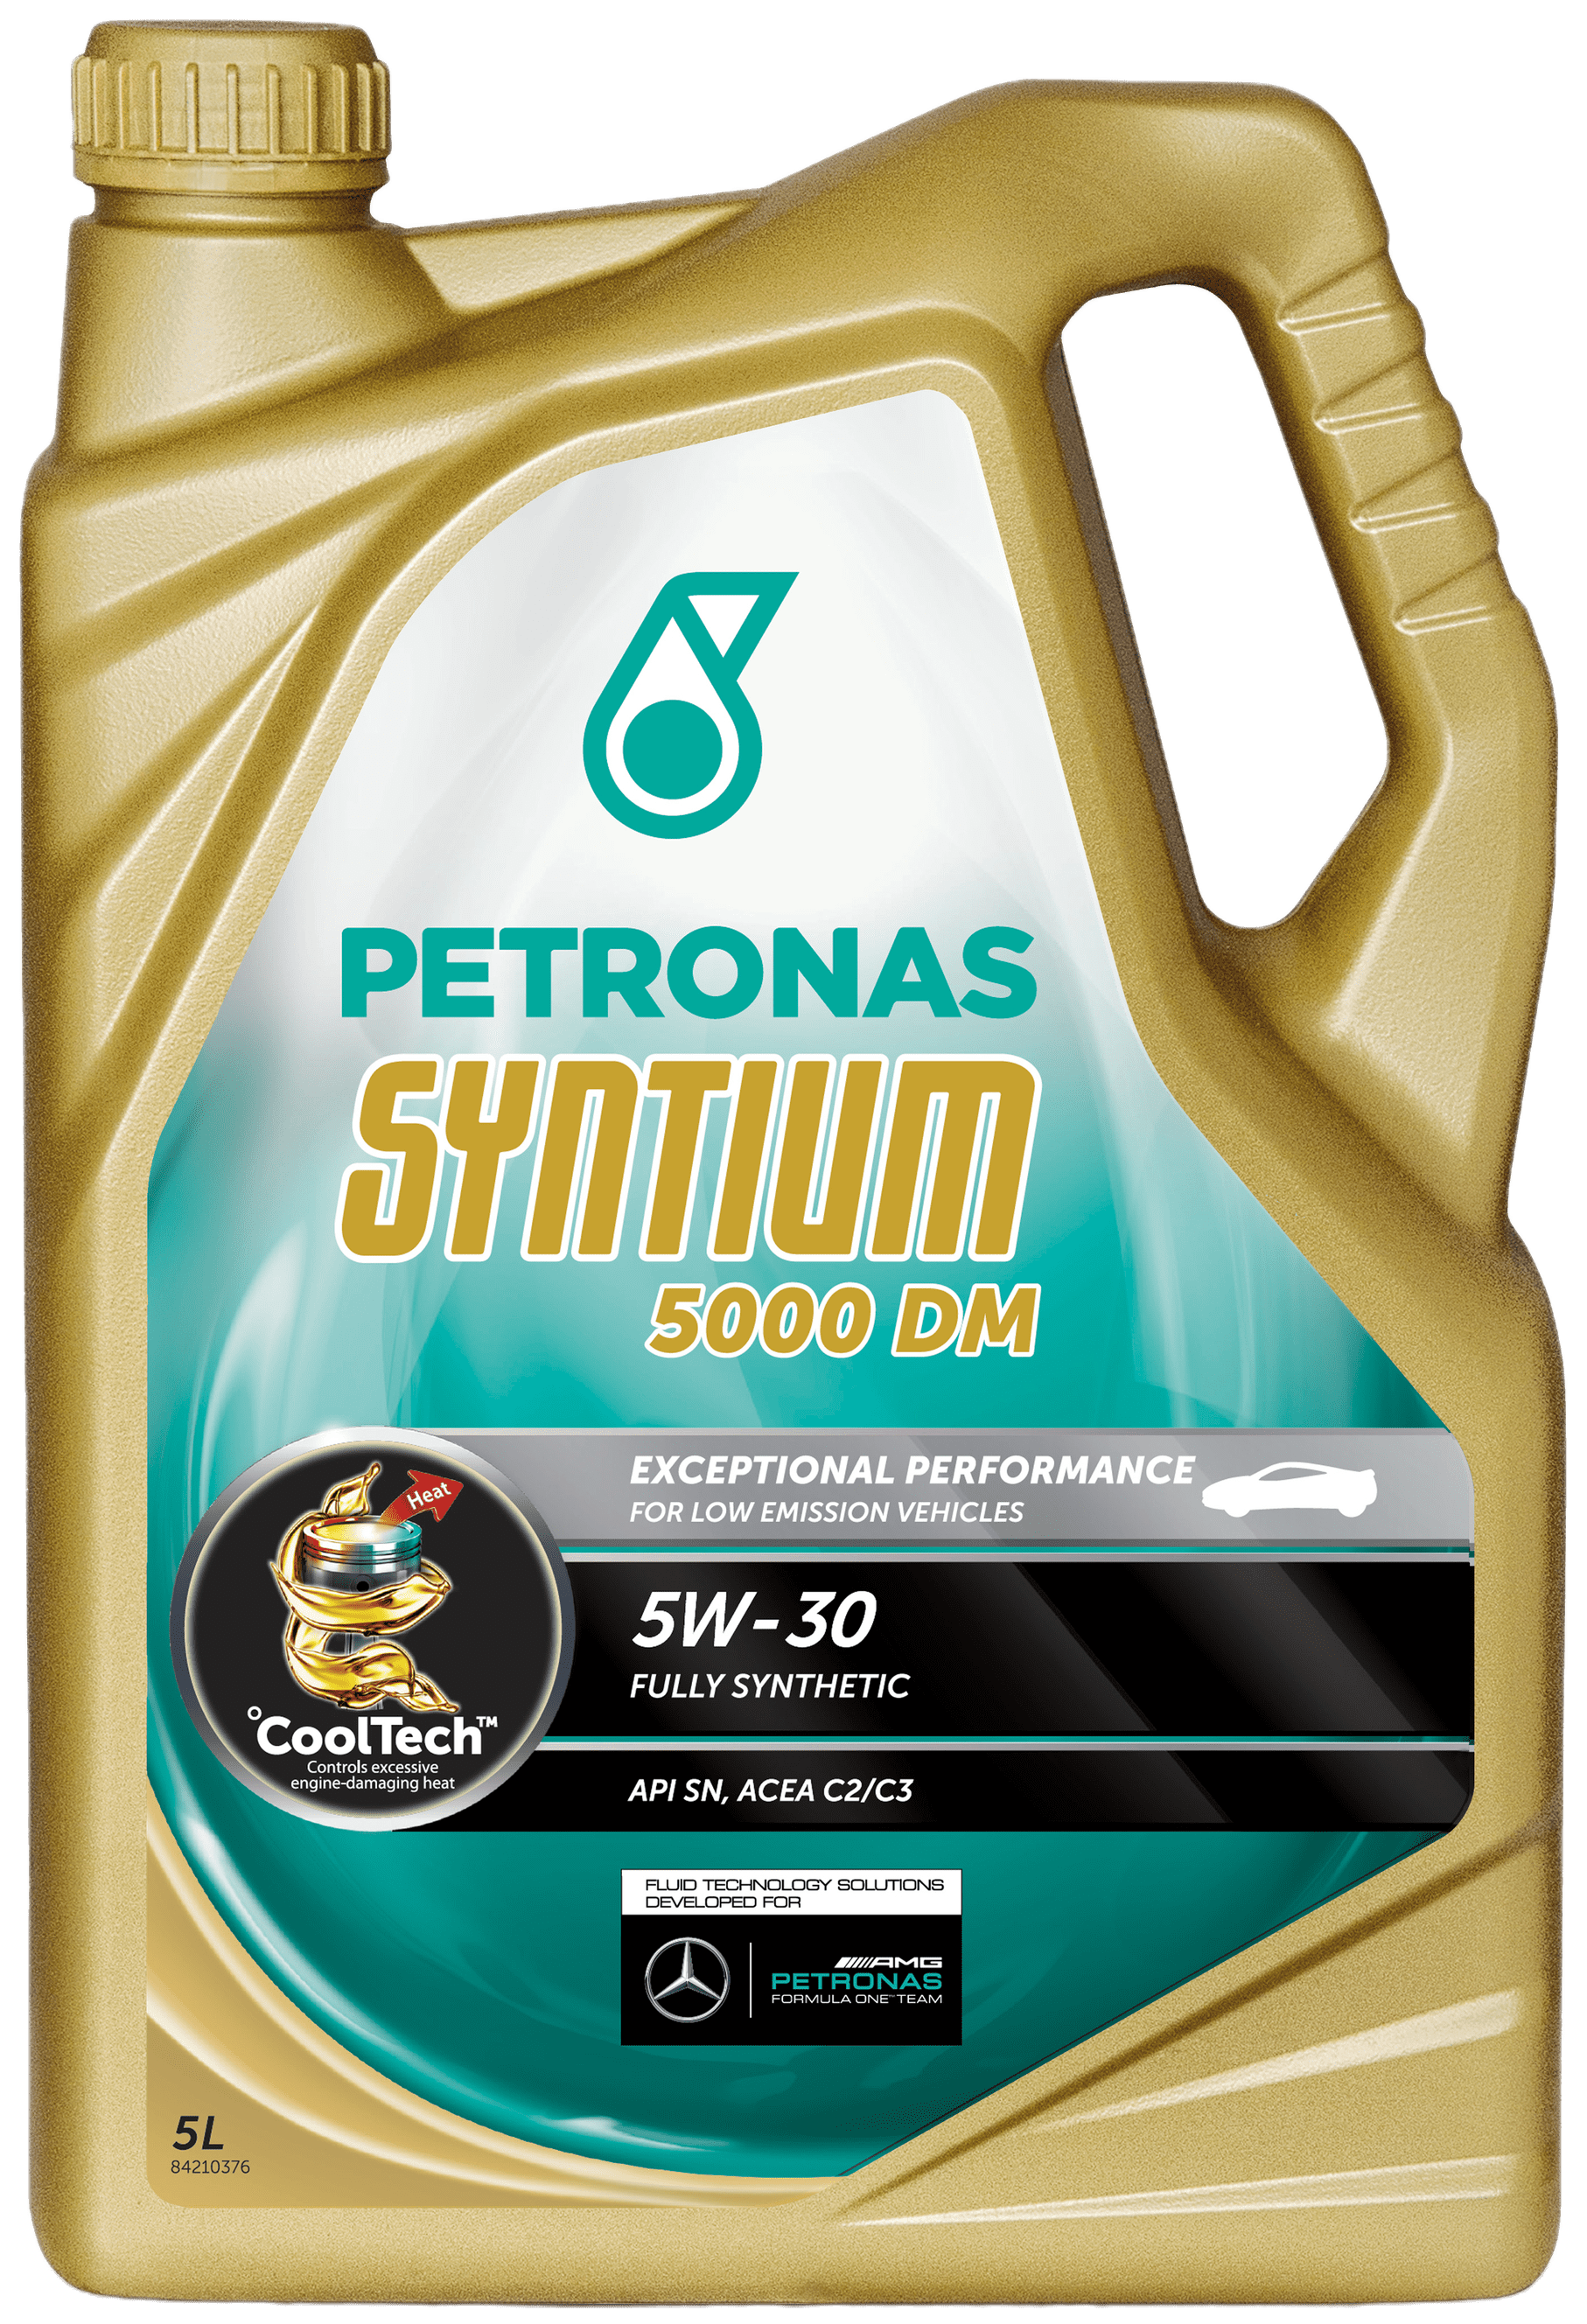 Petronas Syntium 5000 DM 5W-30, 5 lt